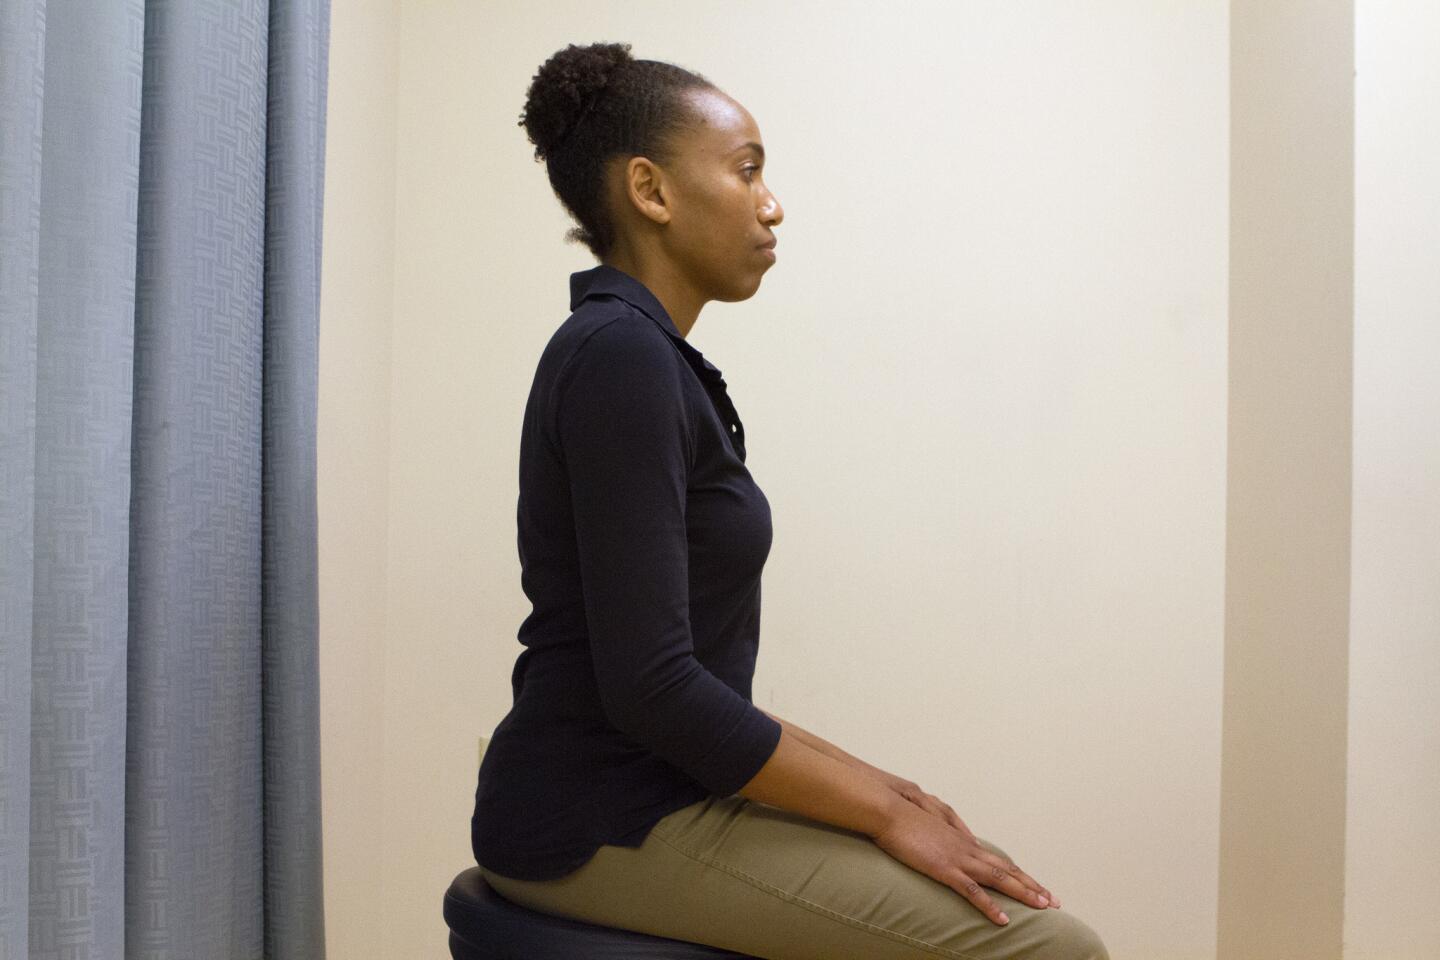 UCLA physical therapist Keri Pegram shows what good posture looks like.